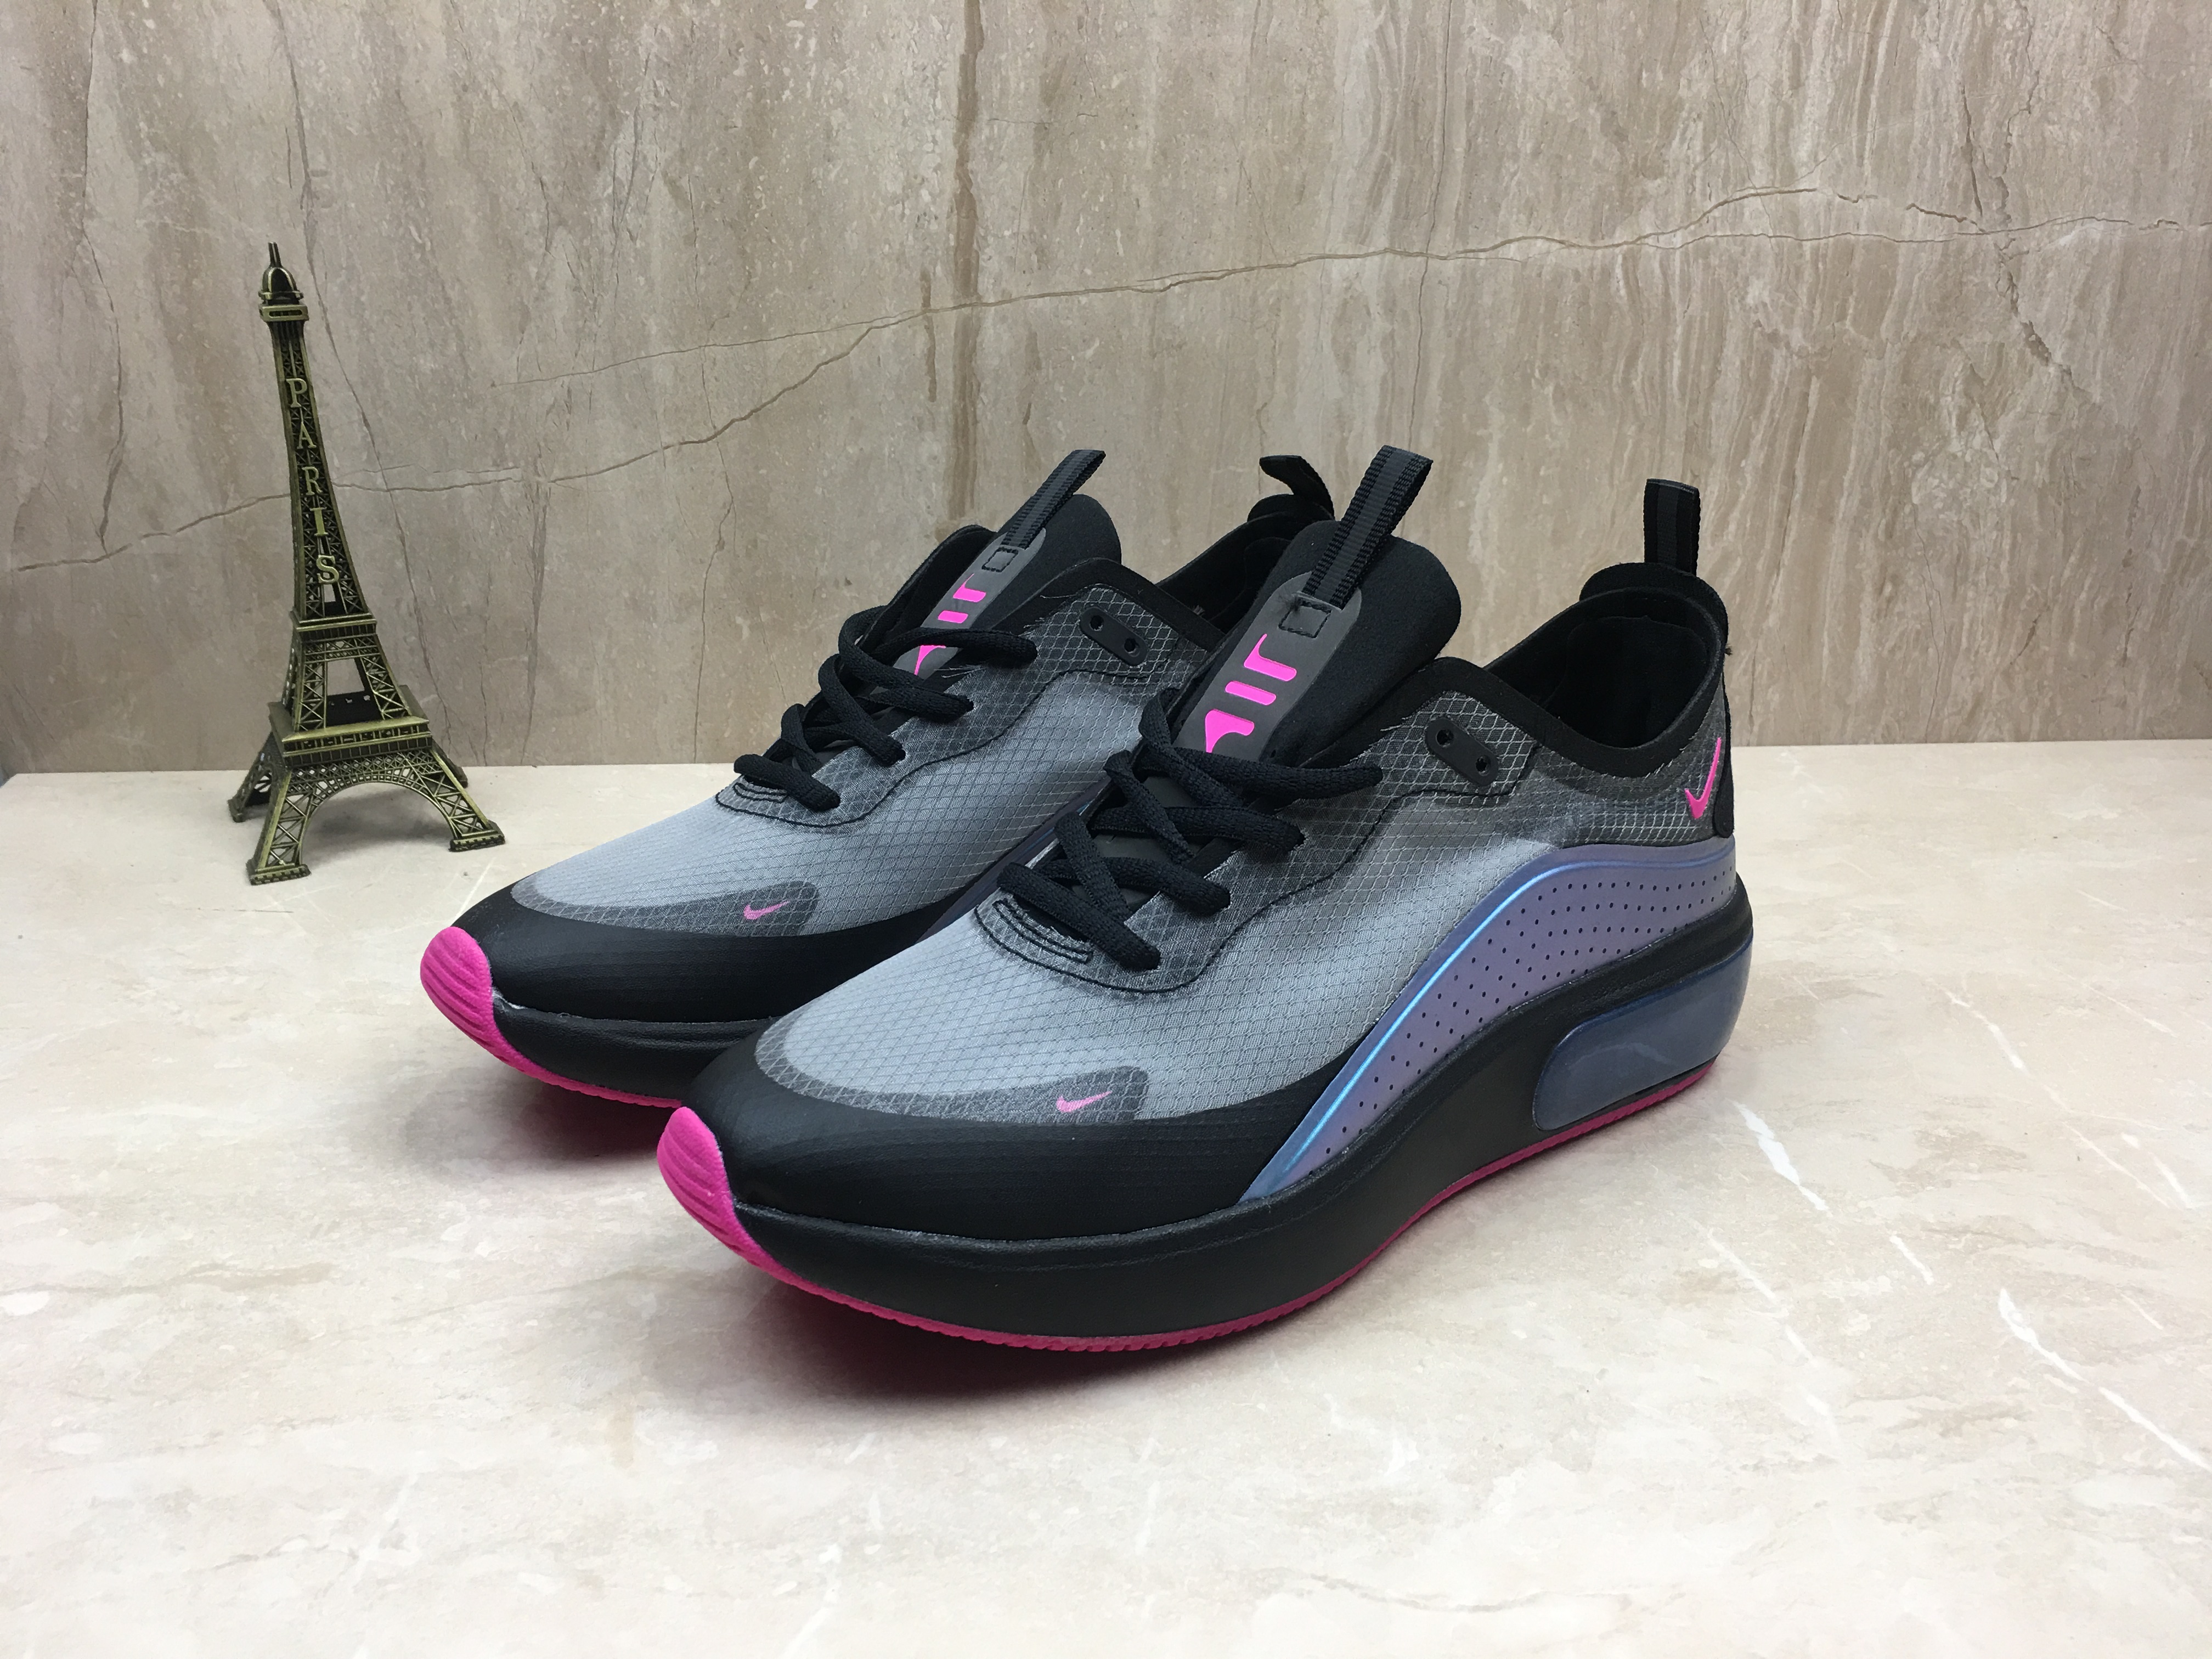 Nike Air Max Dia SE QS Blue Black Pink Shoes